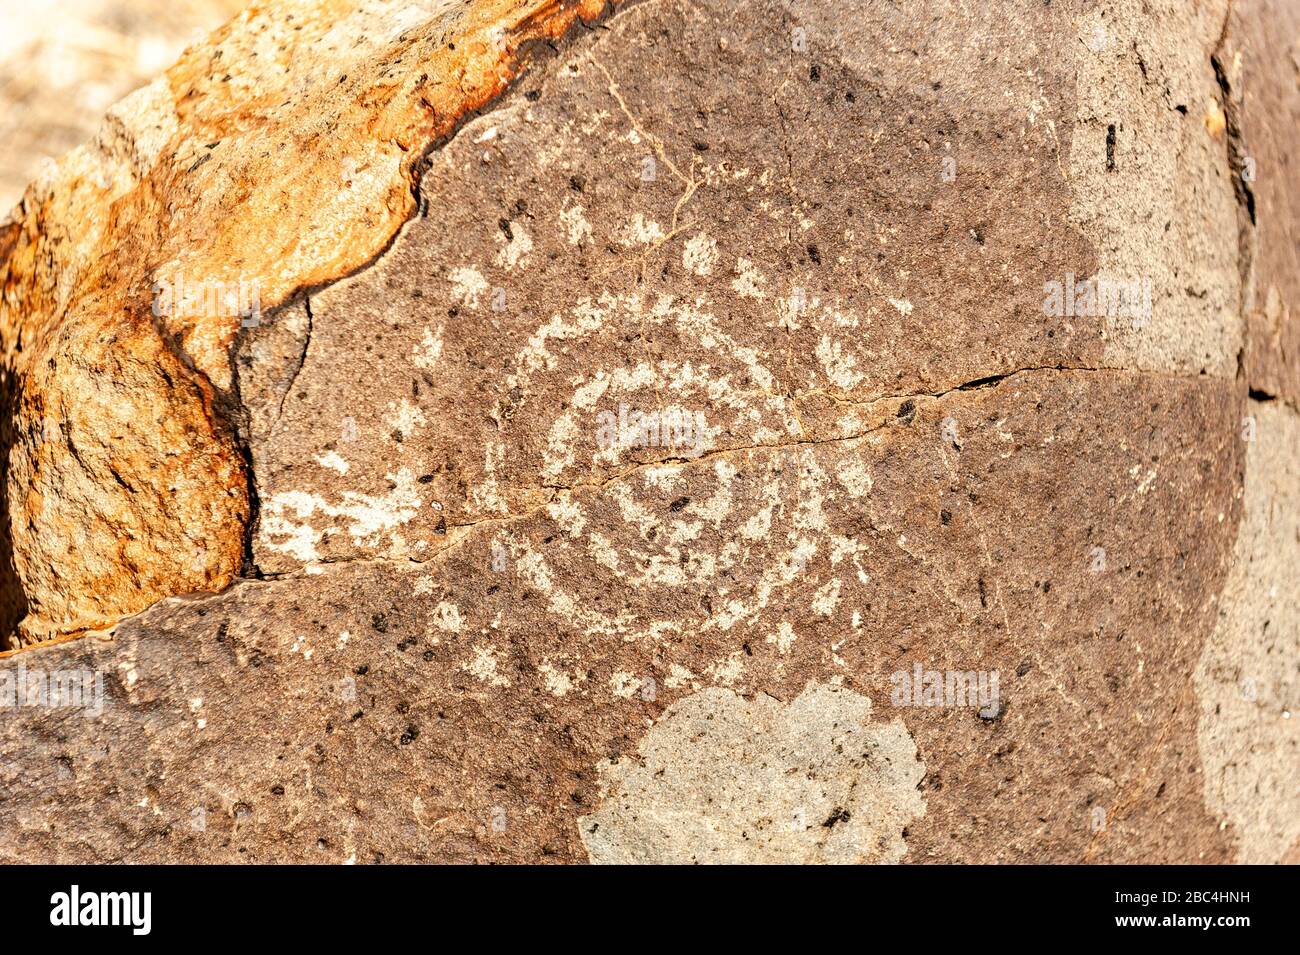 Rock carvings, rock art, petroglyph pattern at Three Rivers Petroglyph Recreational Site, New Mexico, NM, USA Stock Photo